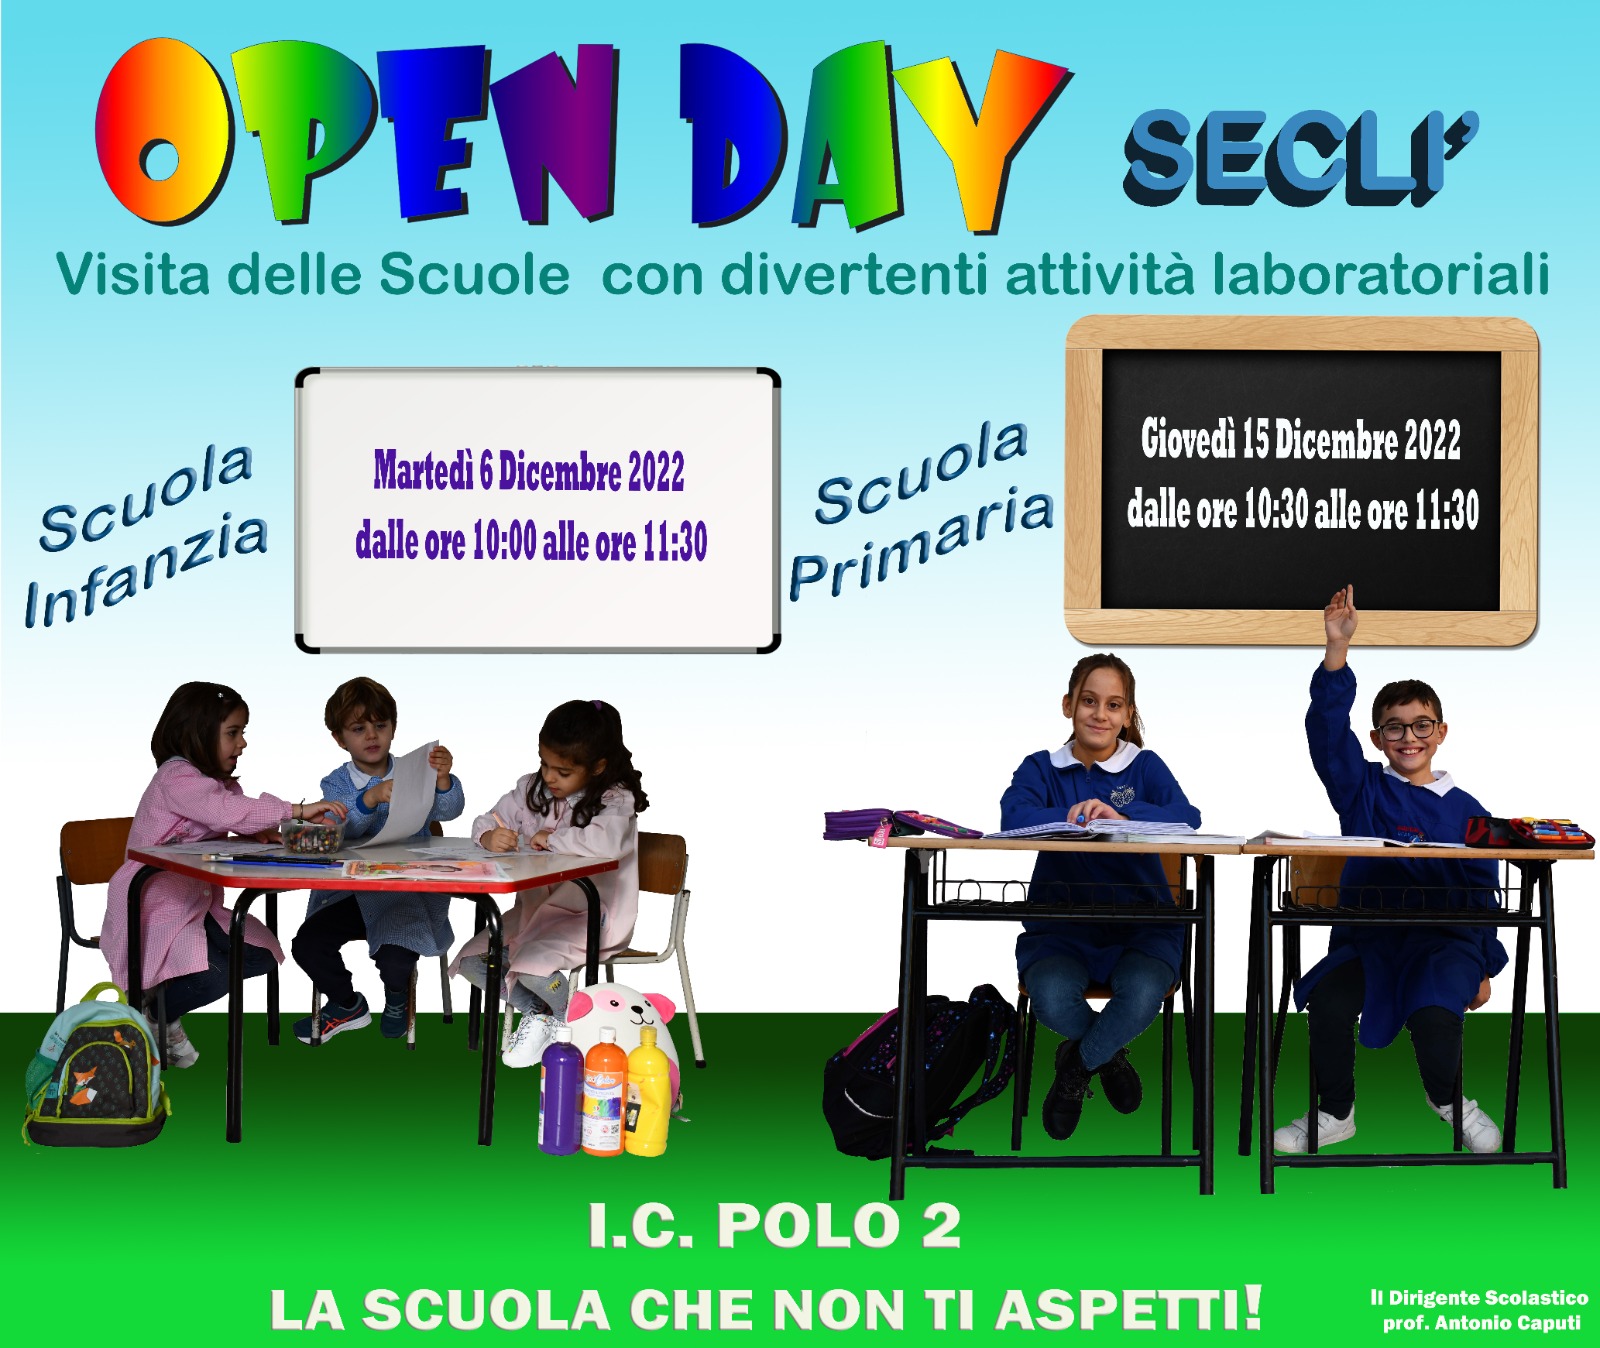 open_day_Secli.jpg